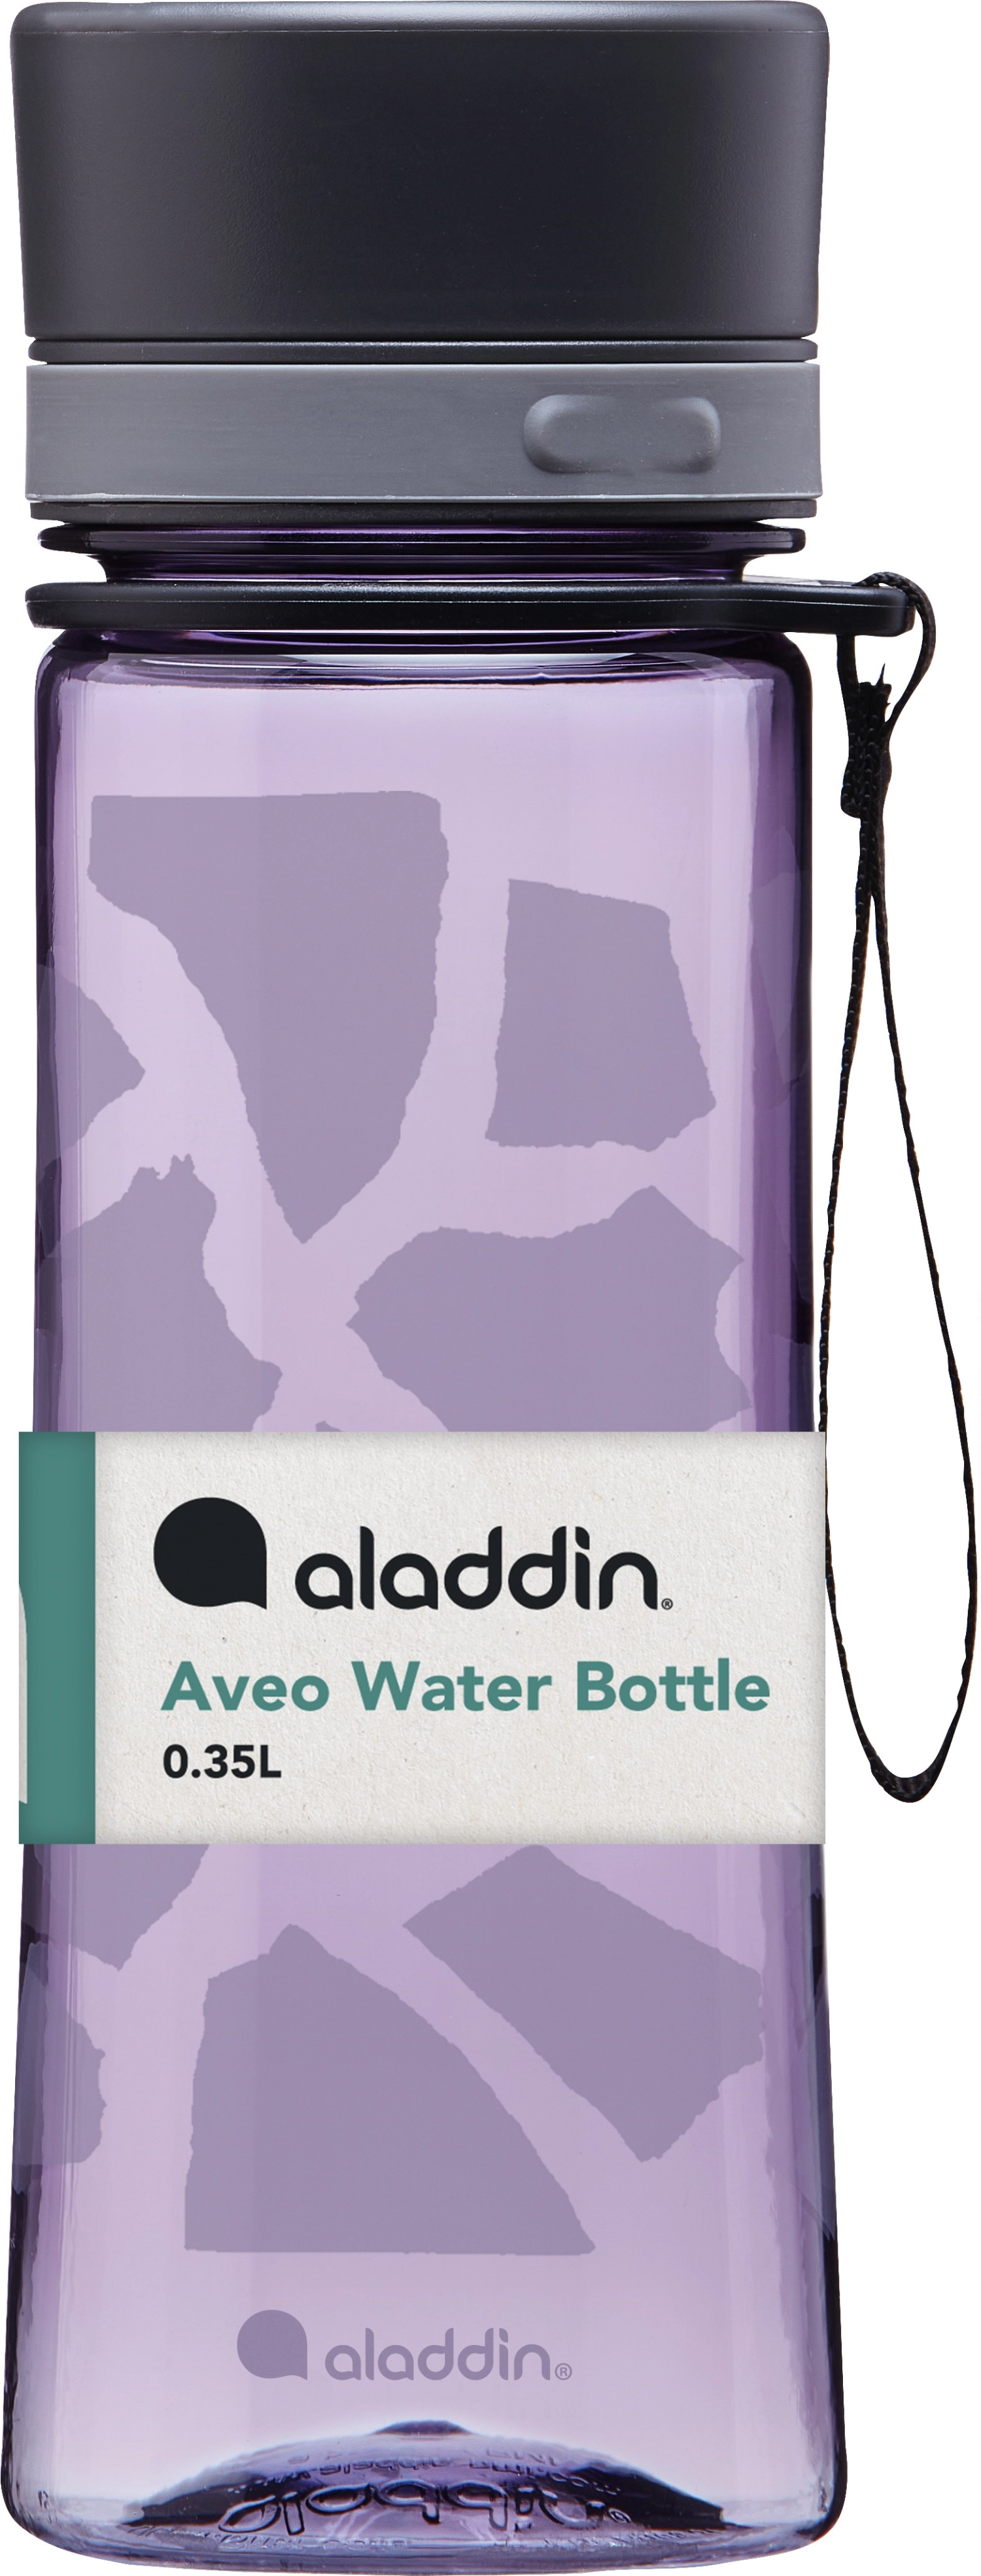 Aladdin aveo water bottle 0.35l violet purple animal print